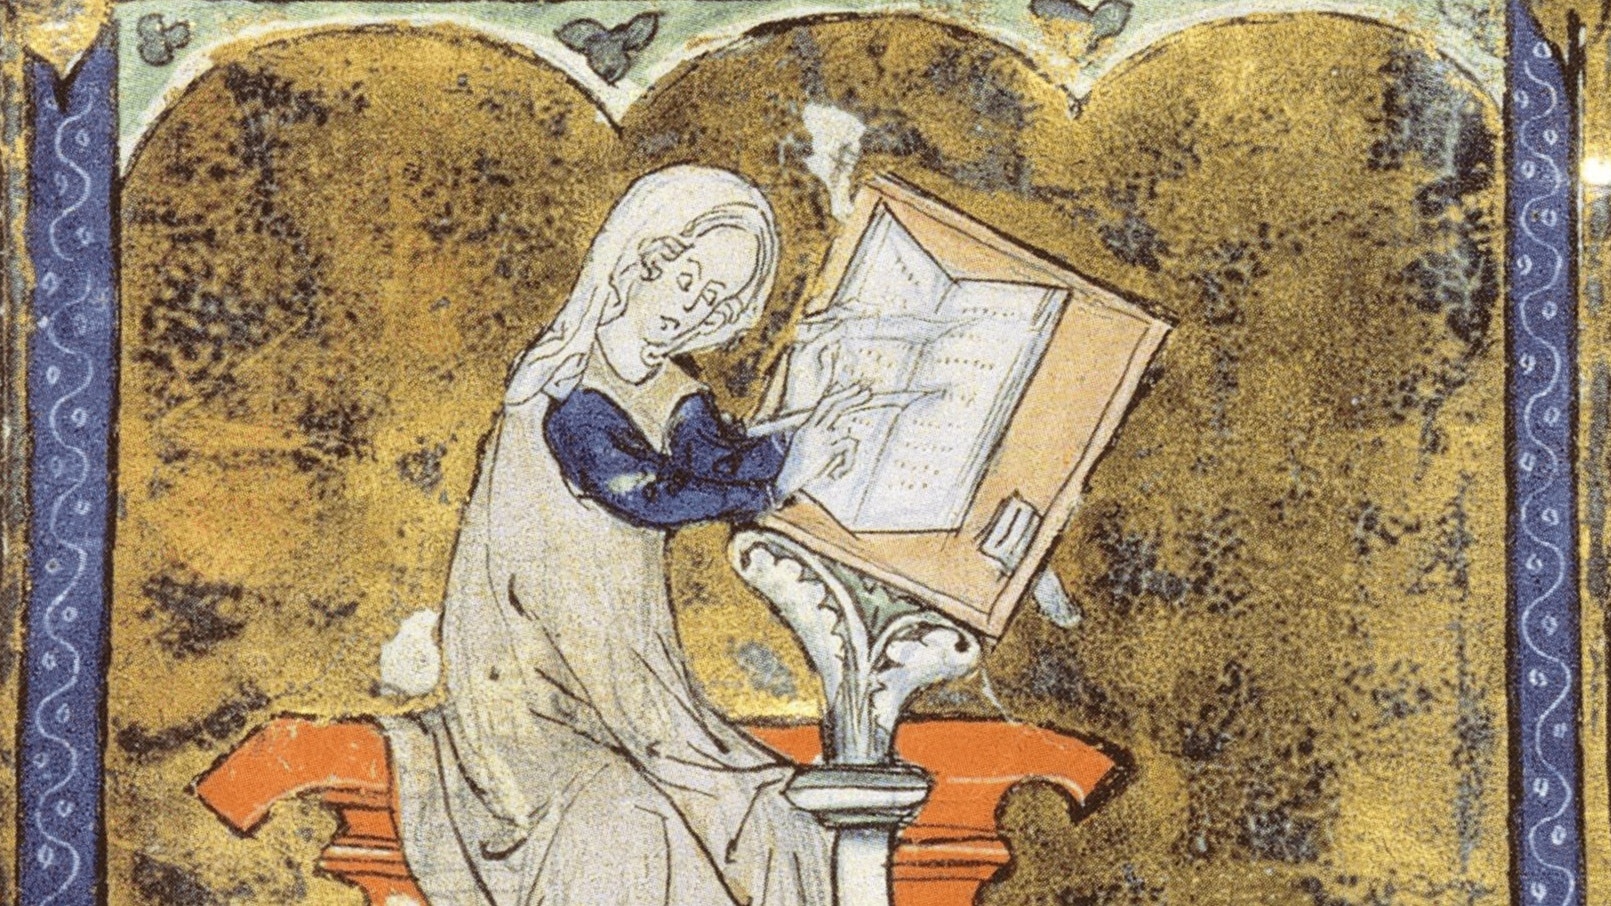 An illuminated manuscript depicts Marie De France at a writing lectern